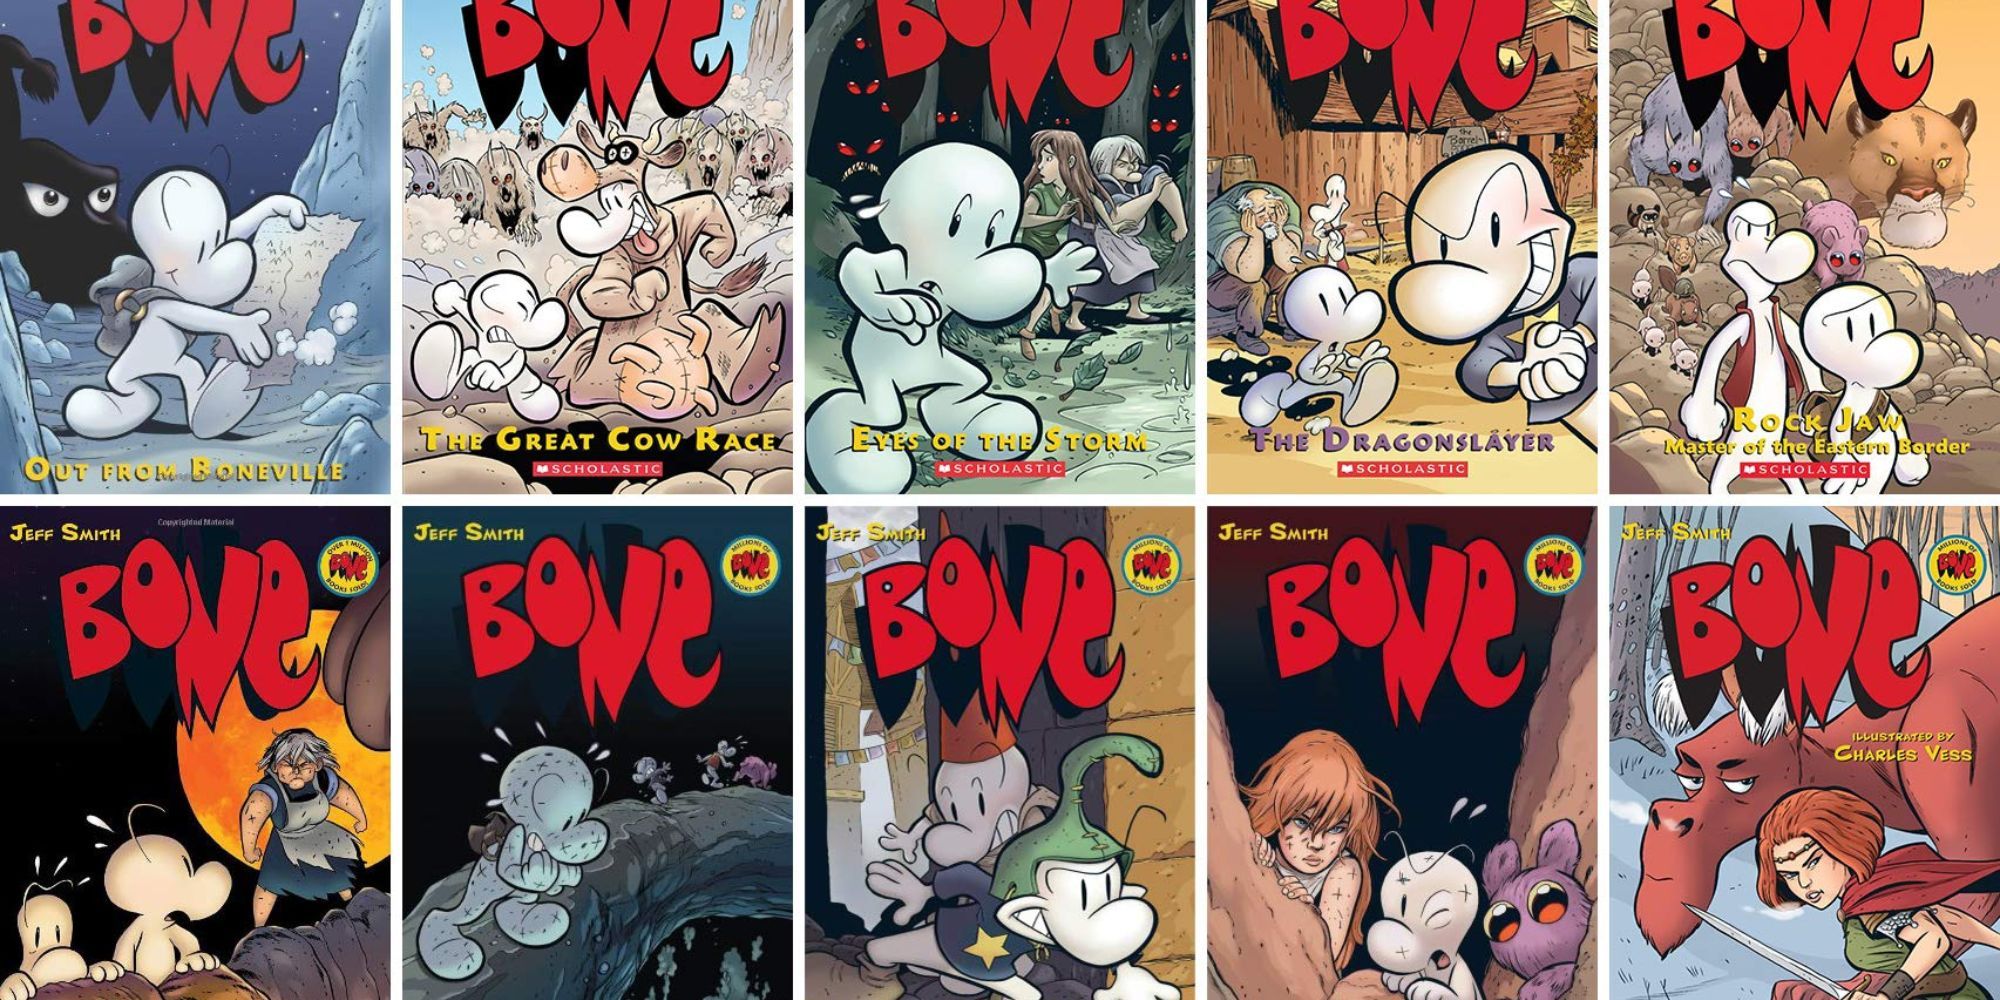 Bone Series cover art